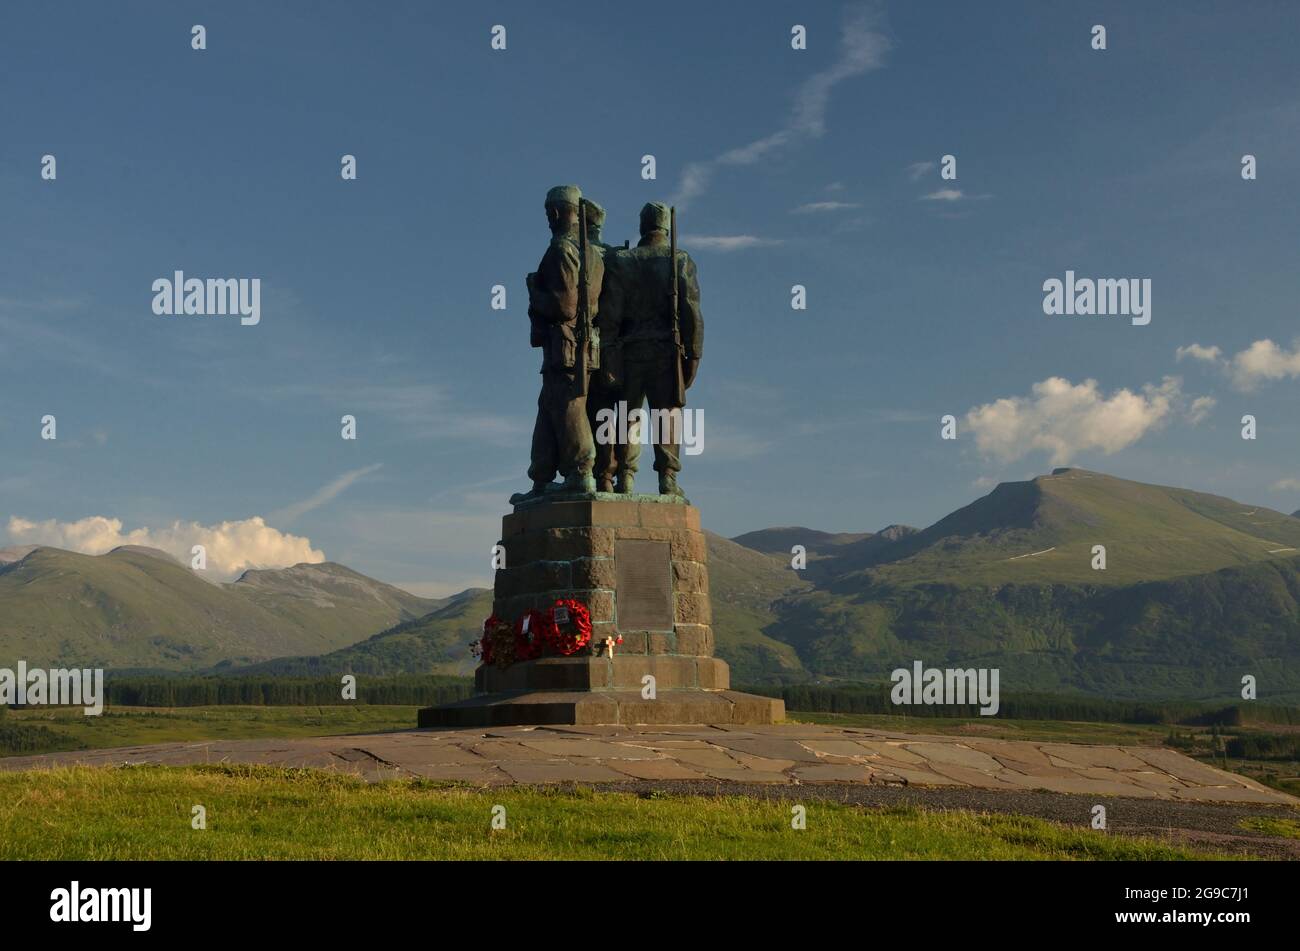 The British Commando Memorial in the Scottish Highlands, UK Stock Photo